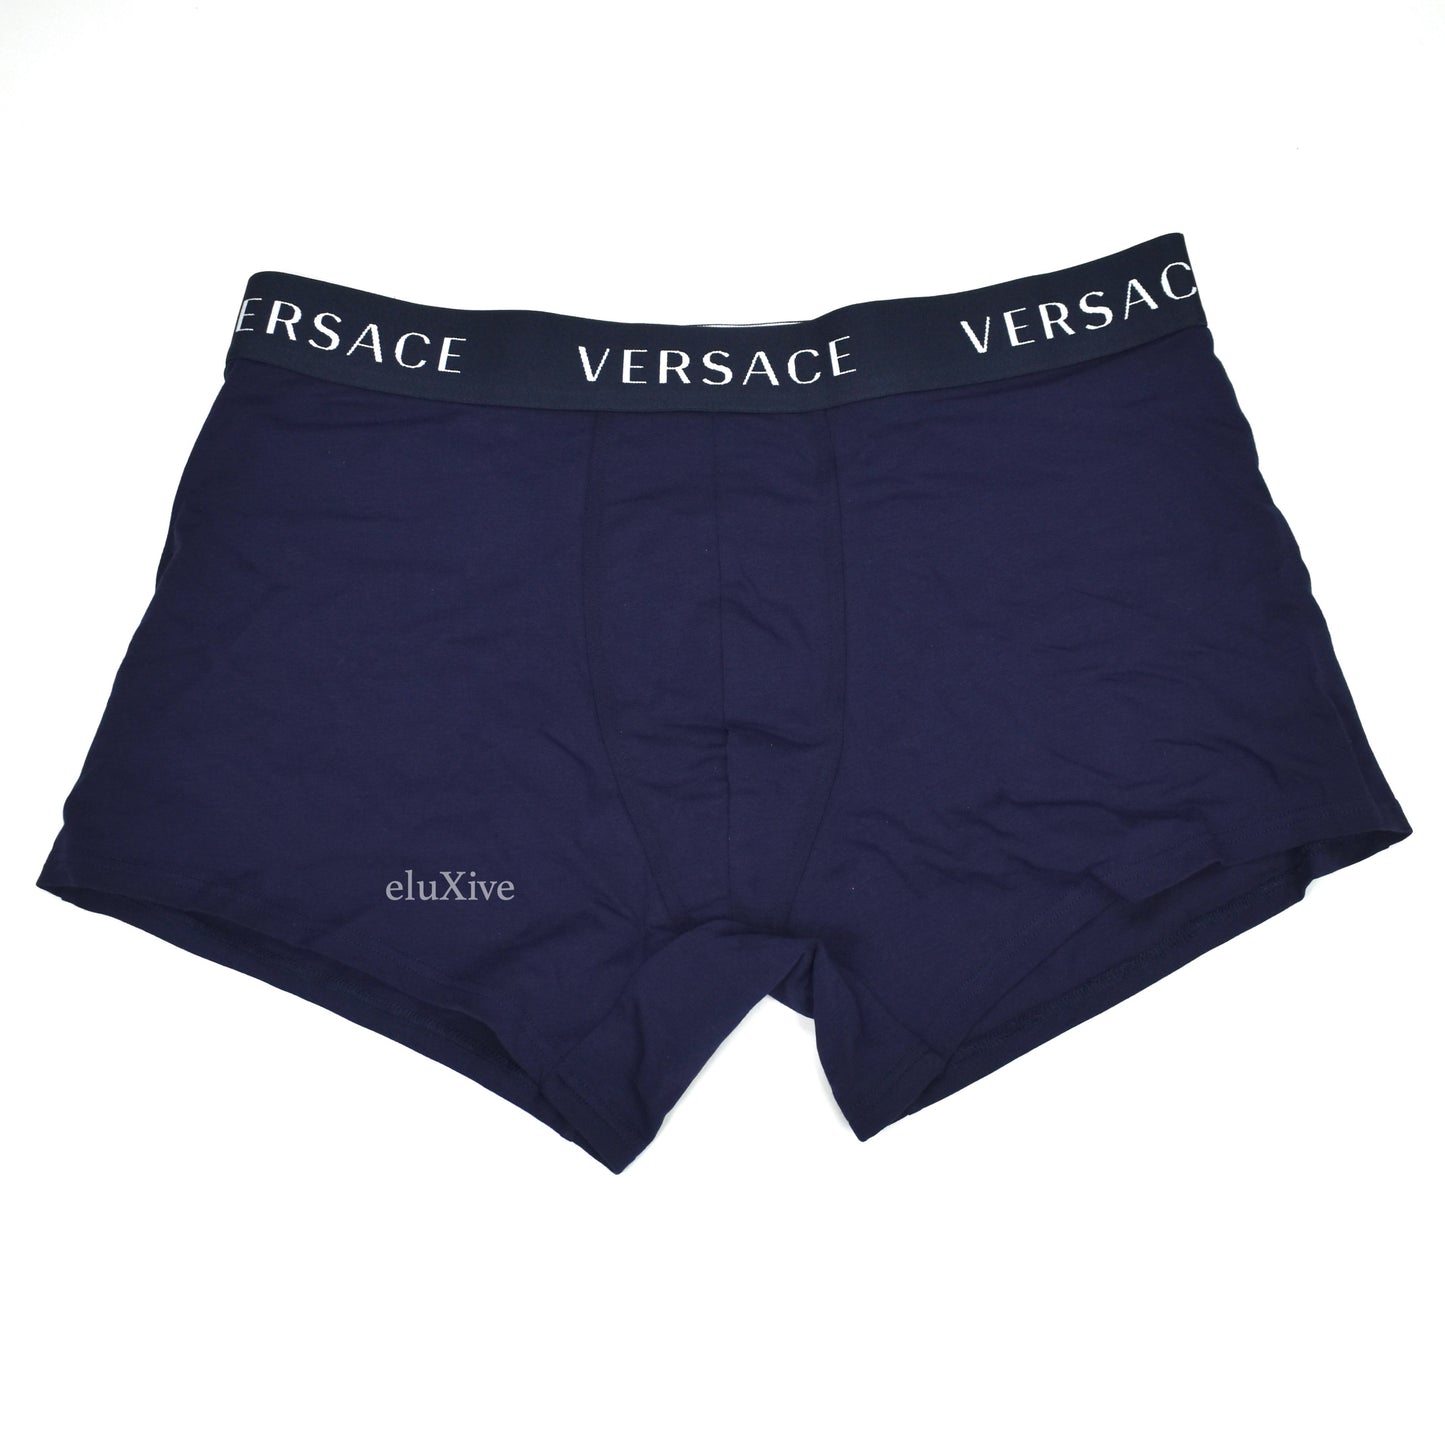 Versace - Navy Logo Boxer Briefs (2-Pack)